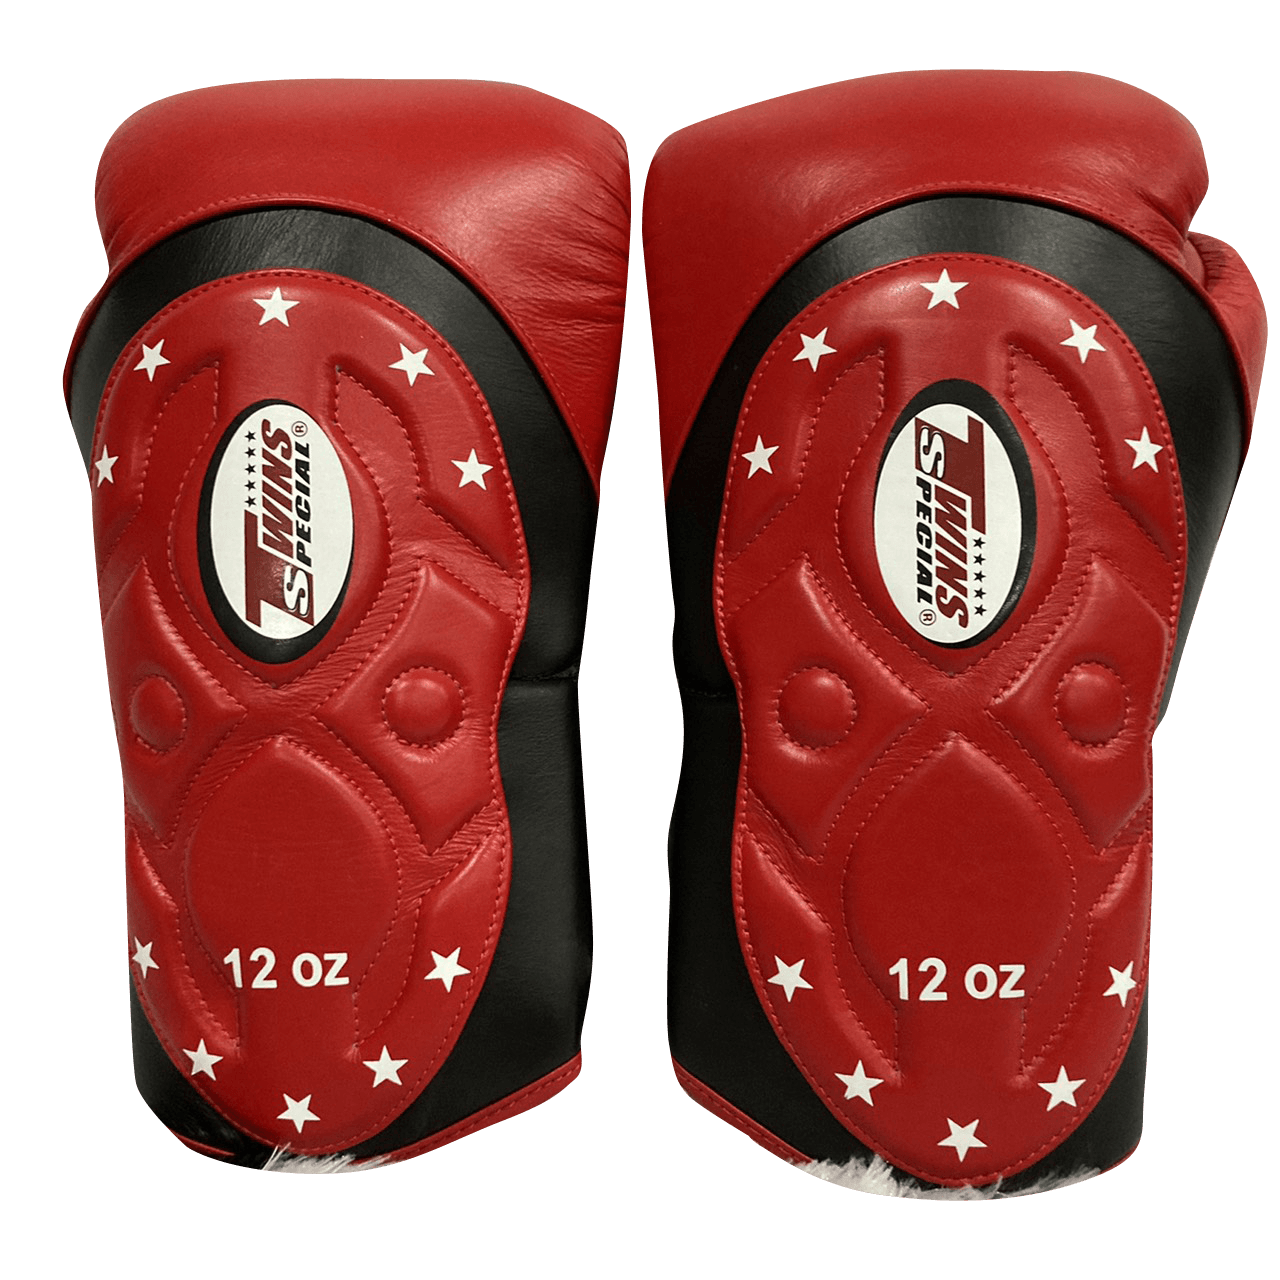 Twins Special Boxing Gloves BGVL6 Black Red MK - SUPER EXPORT SHOP